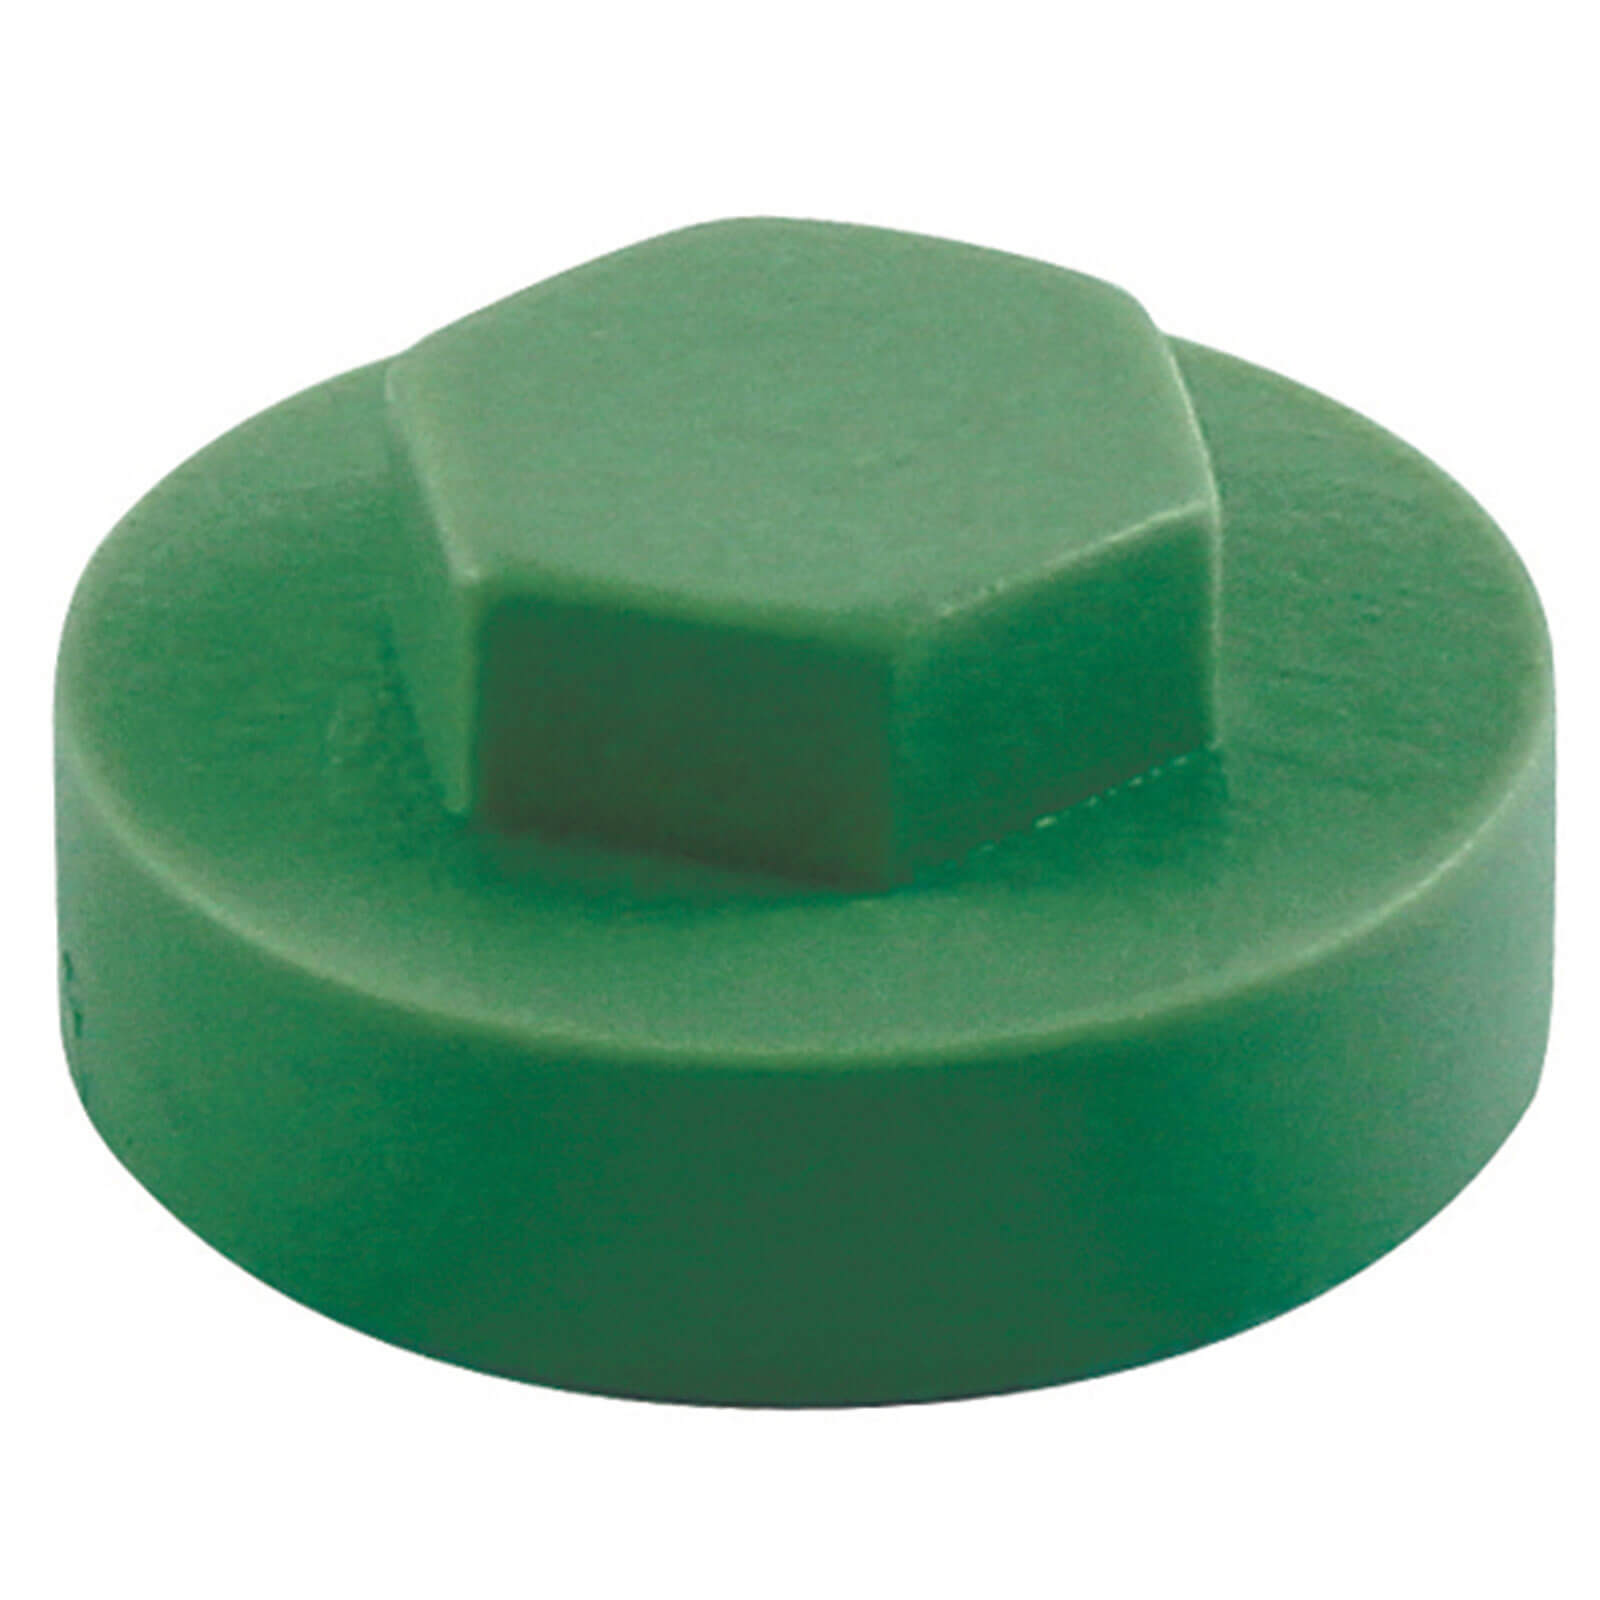 Image of Colour Match Hexagon Screw Cover Cap 5/16" x 16mm Juniper Green Pack of 1000